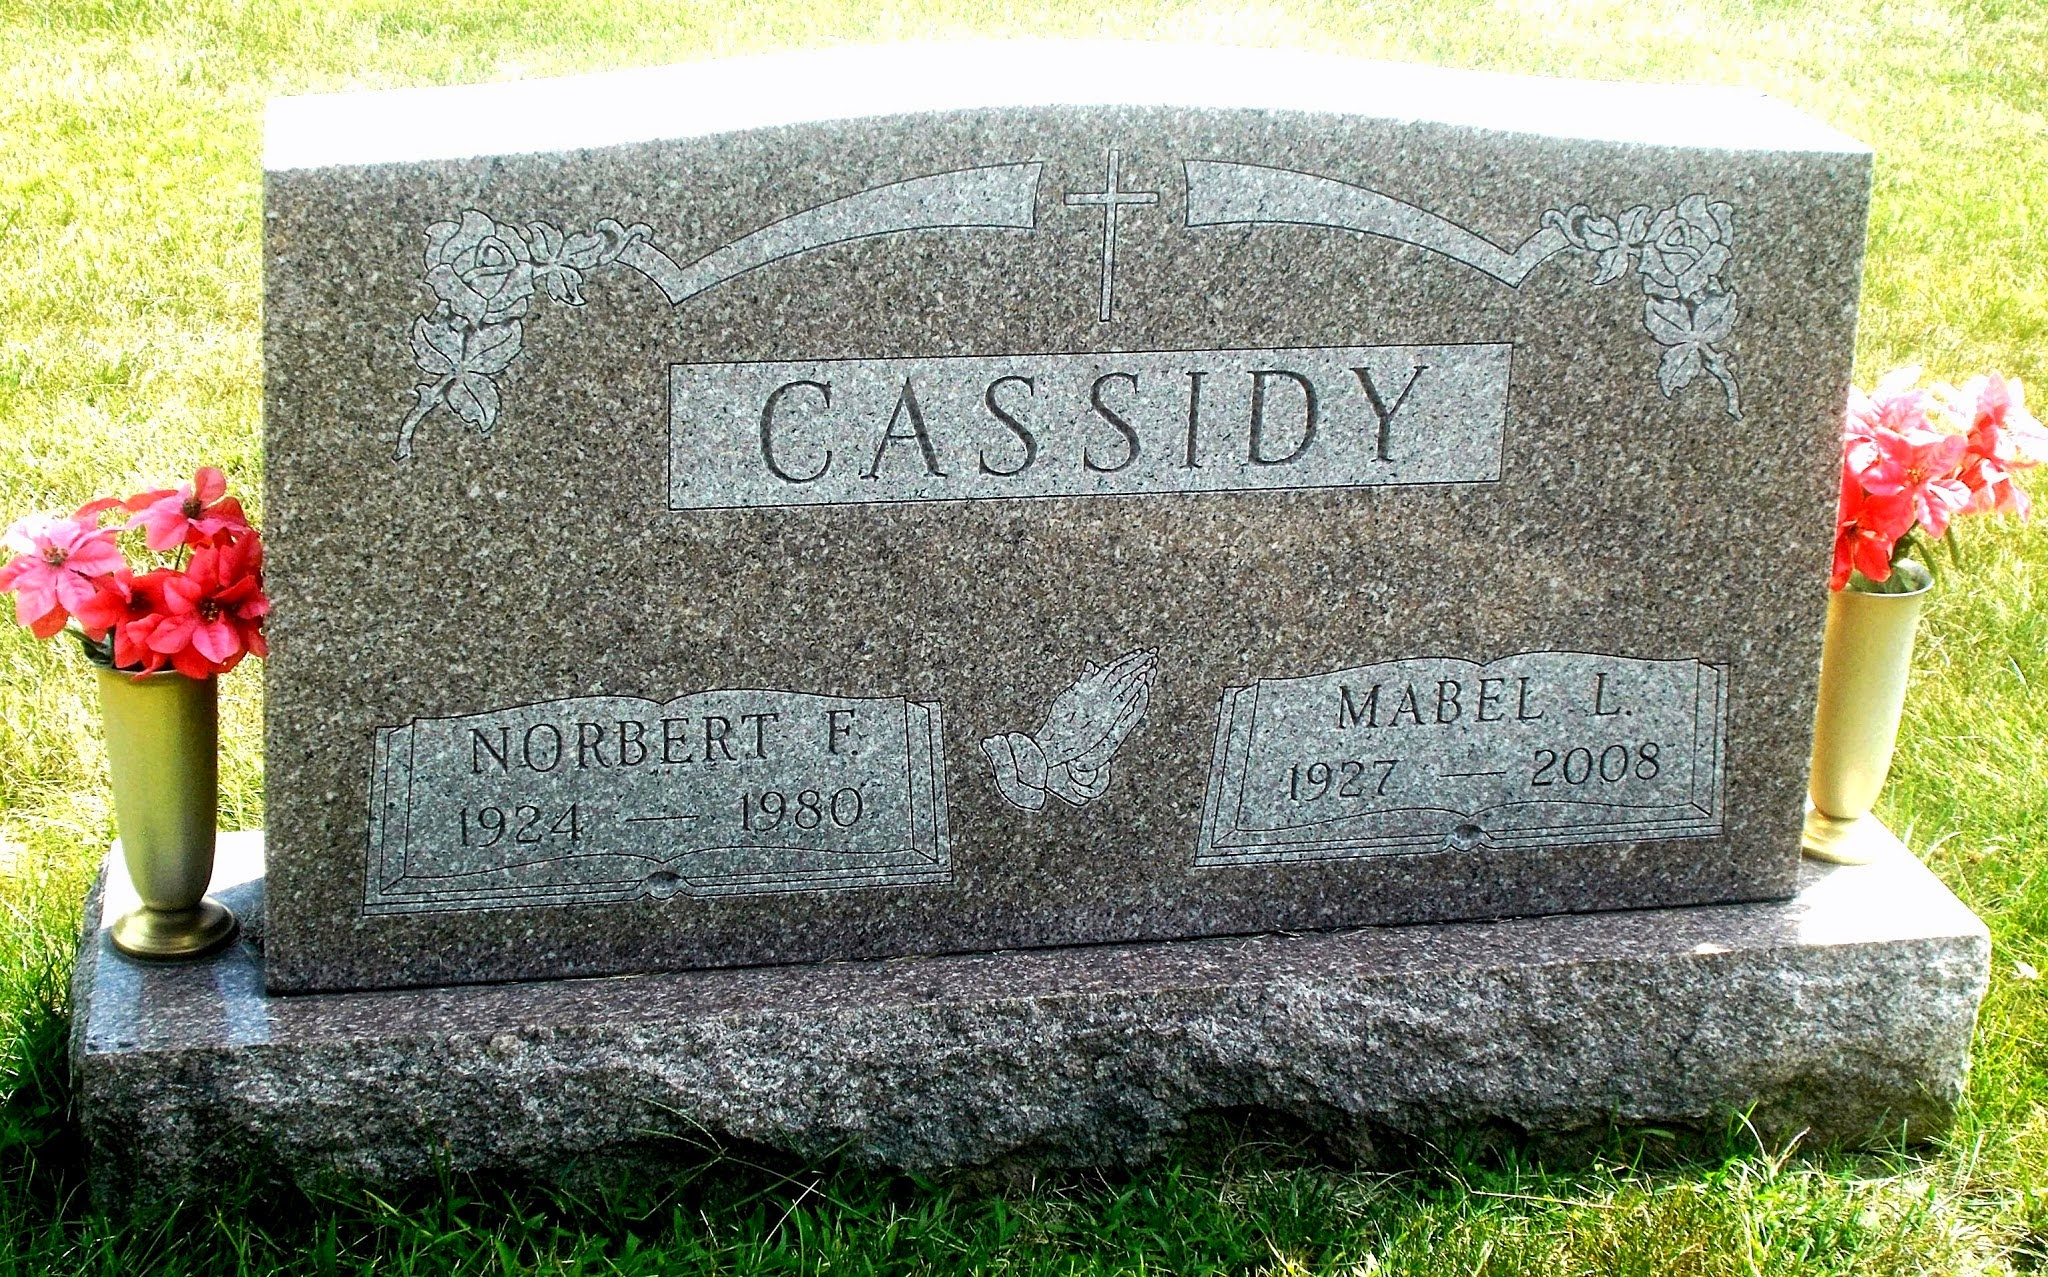 Norbert F Cassidy